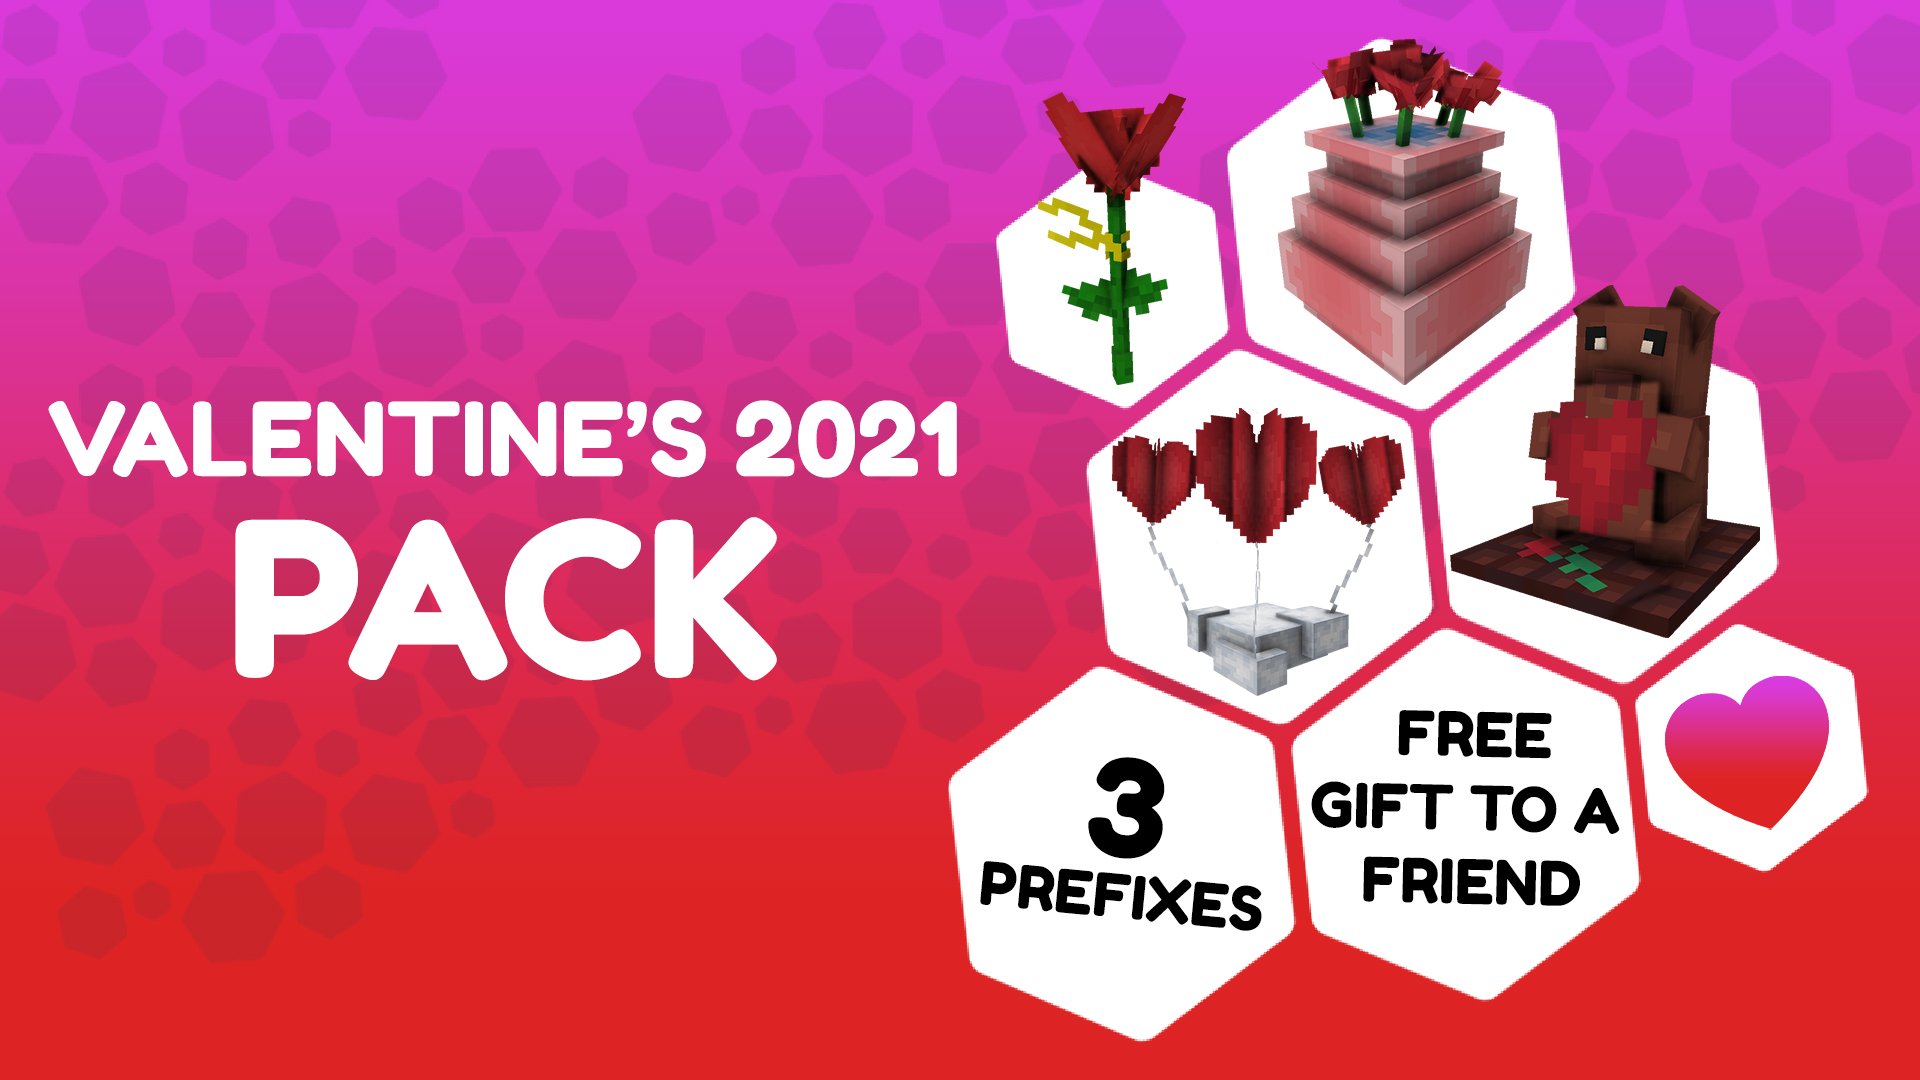 ValentinesPack2021_MarketingKeyArt.jpg